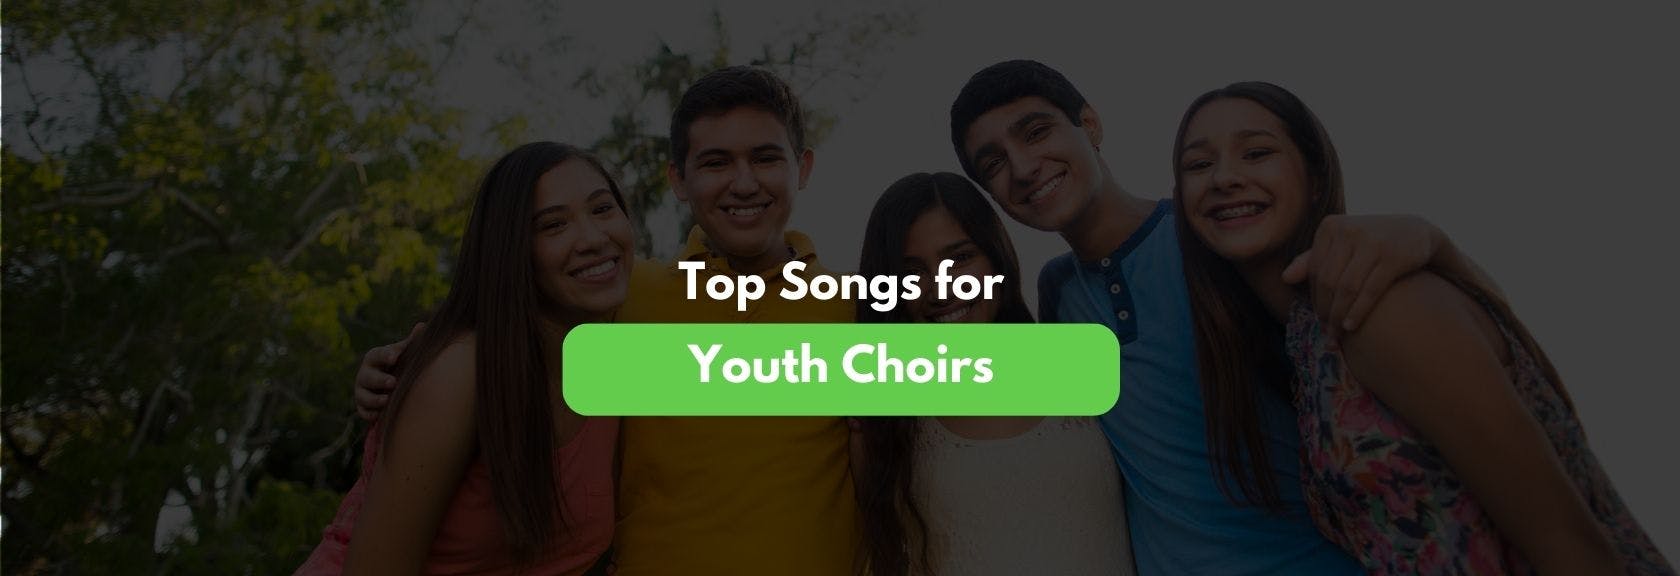 youth-choir-songs